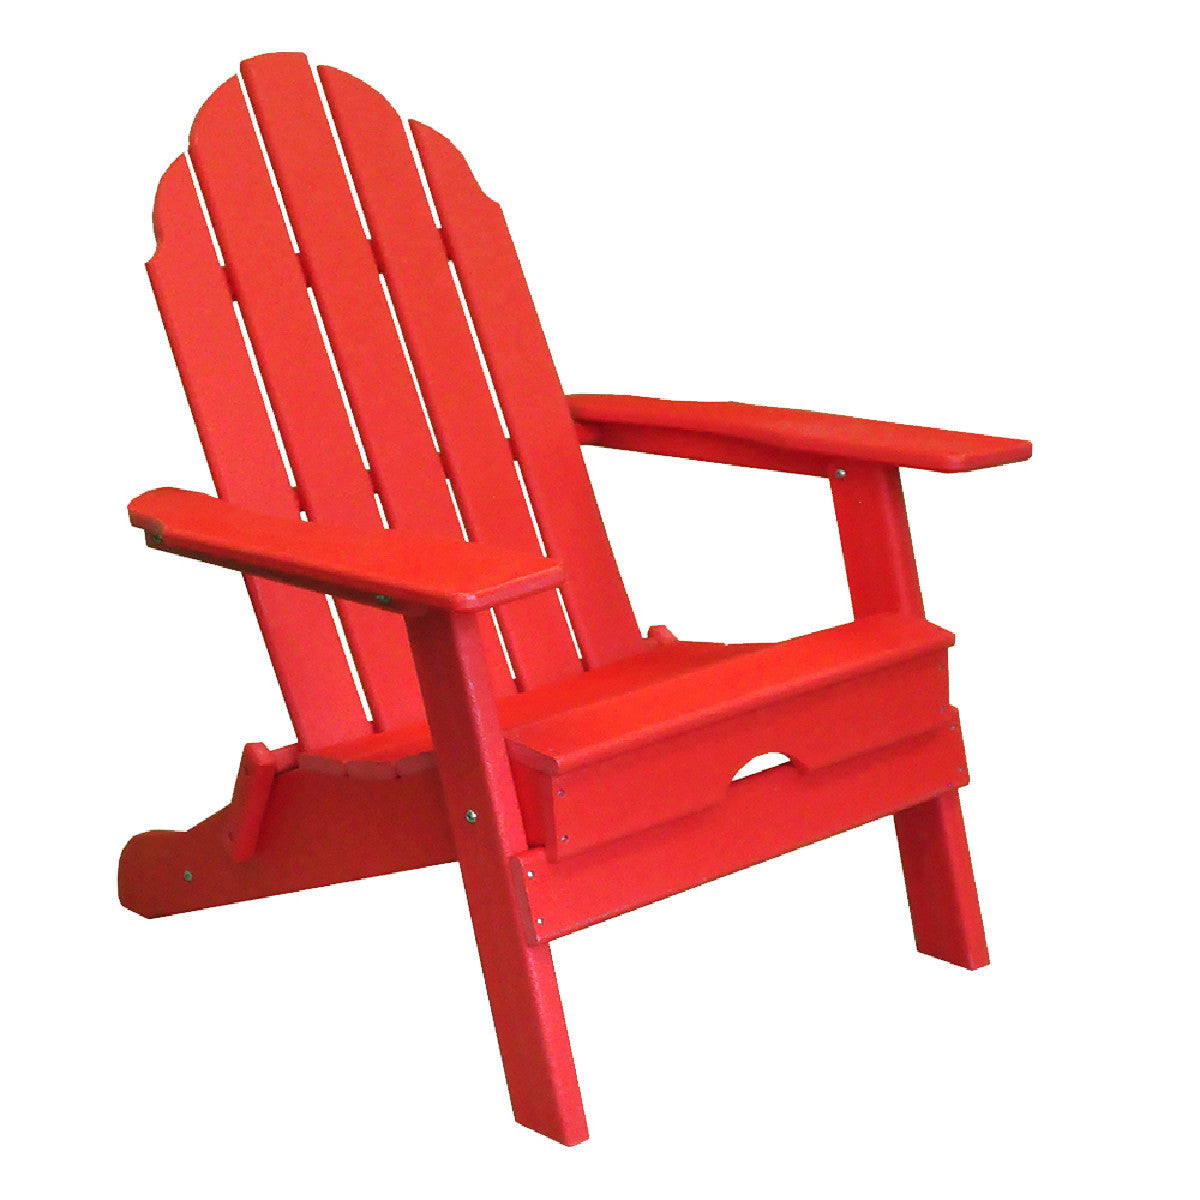 30" Red Heavy Duty Plastic Adirondack Chair